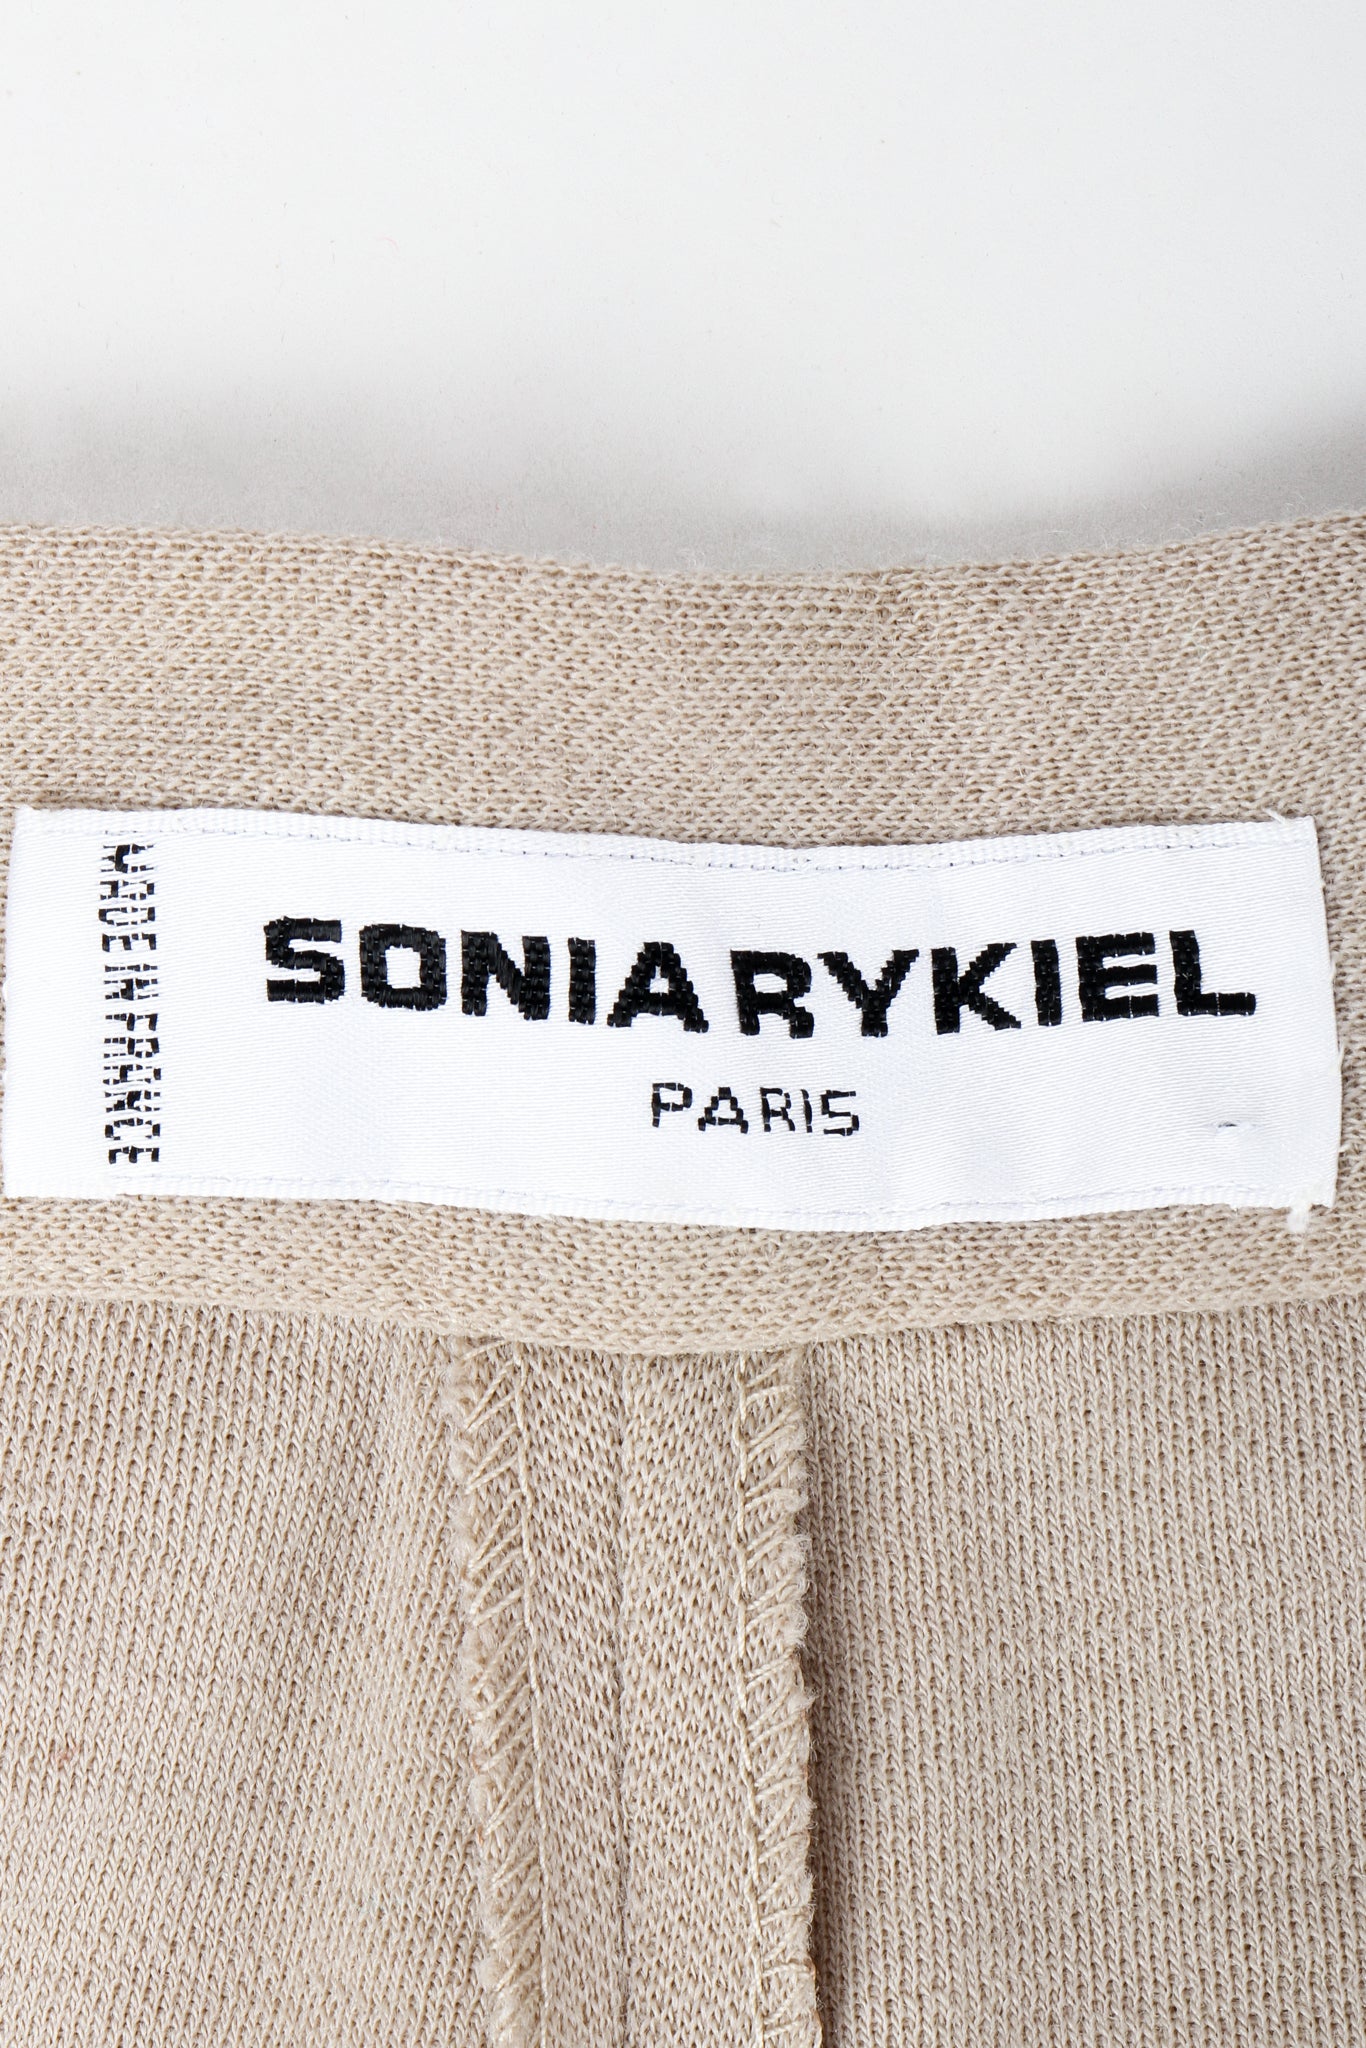 Vintage Sonia Rykiel label on beige